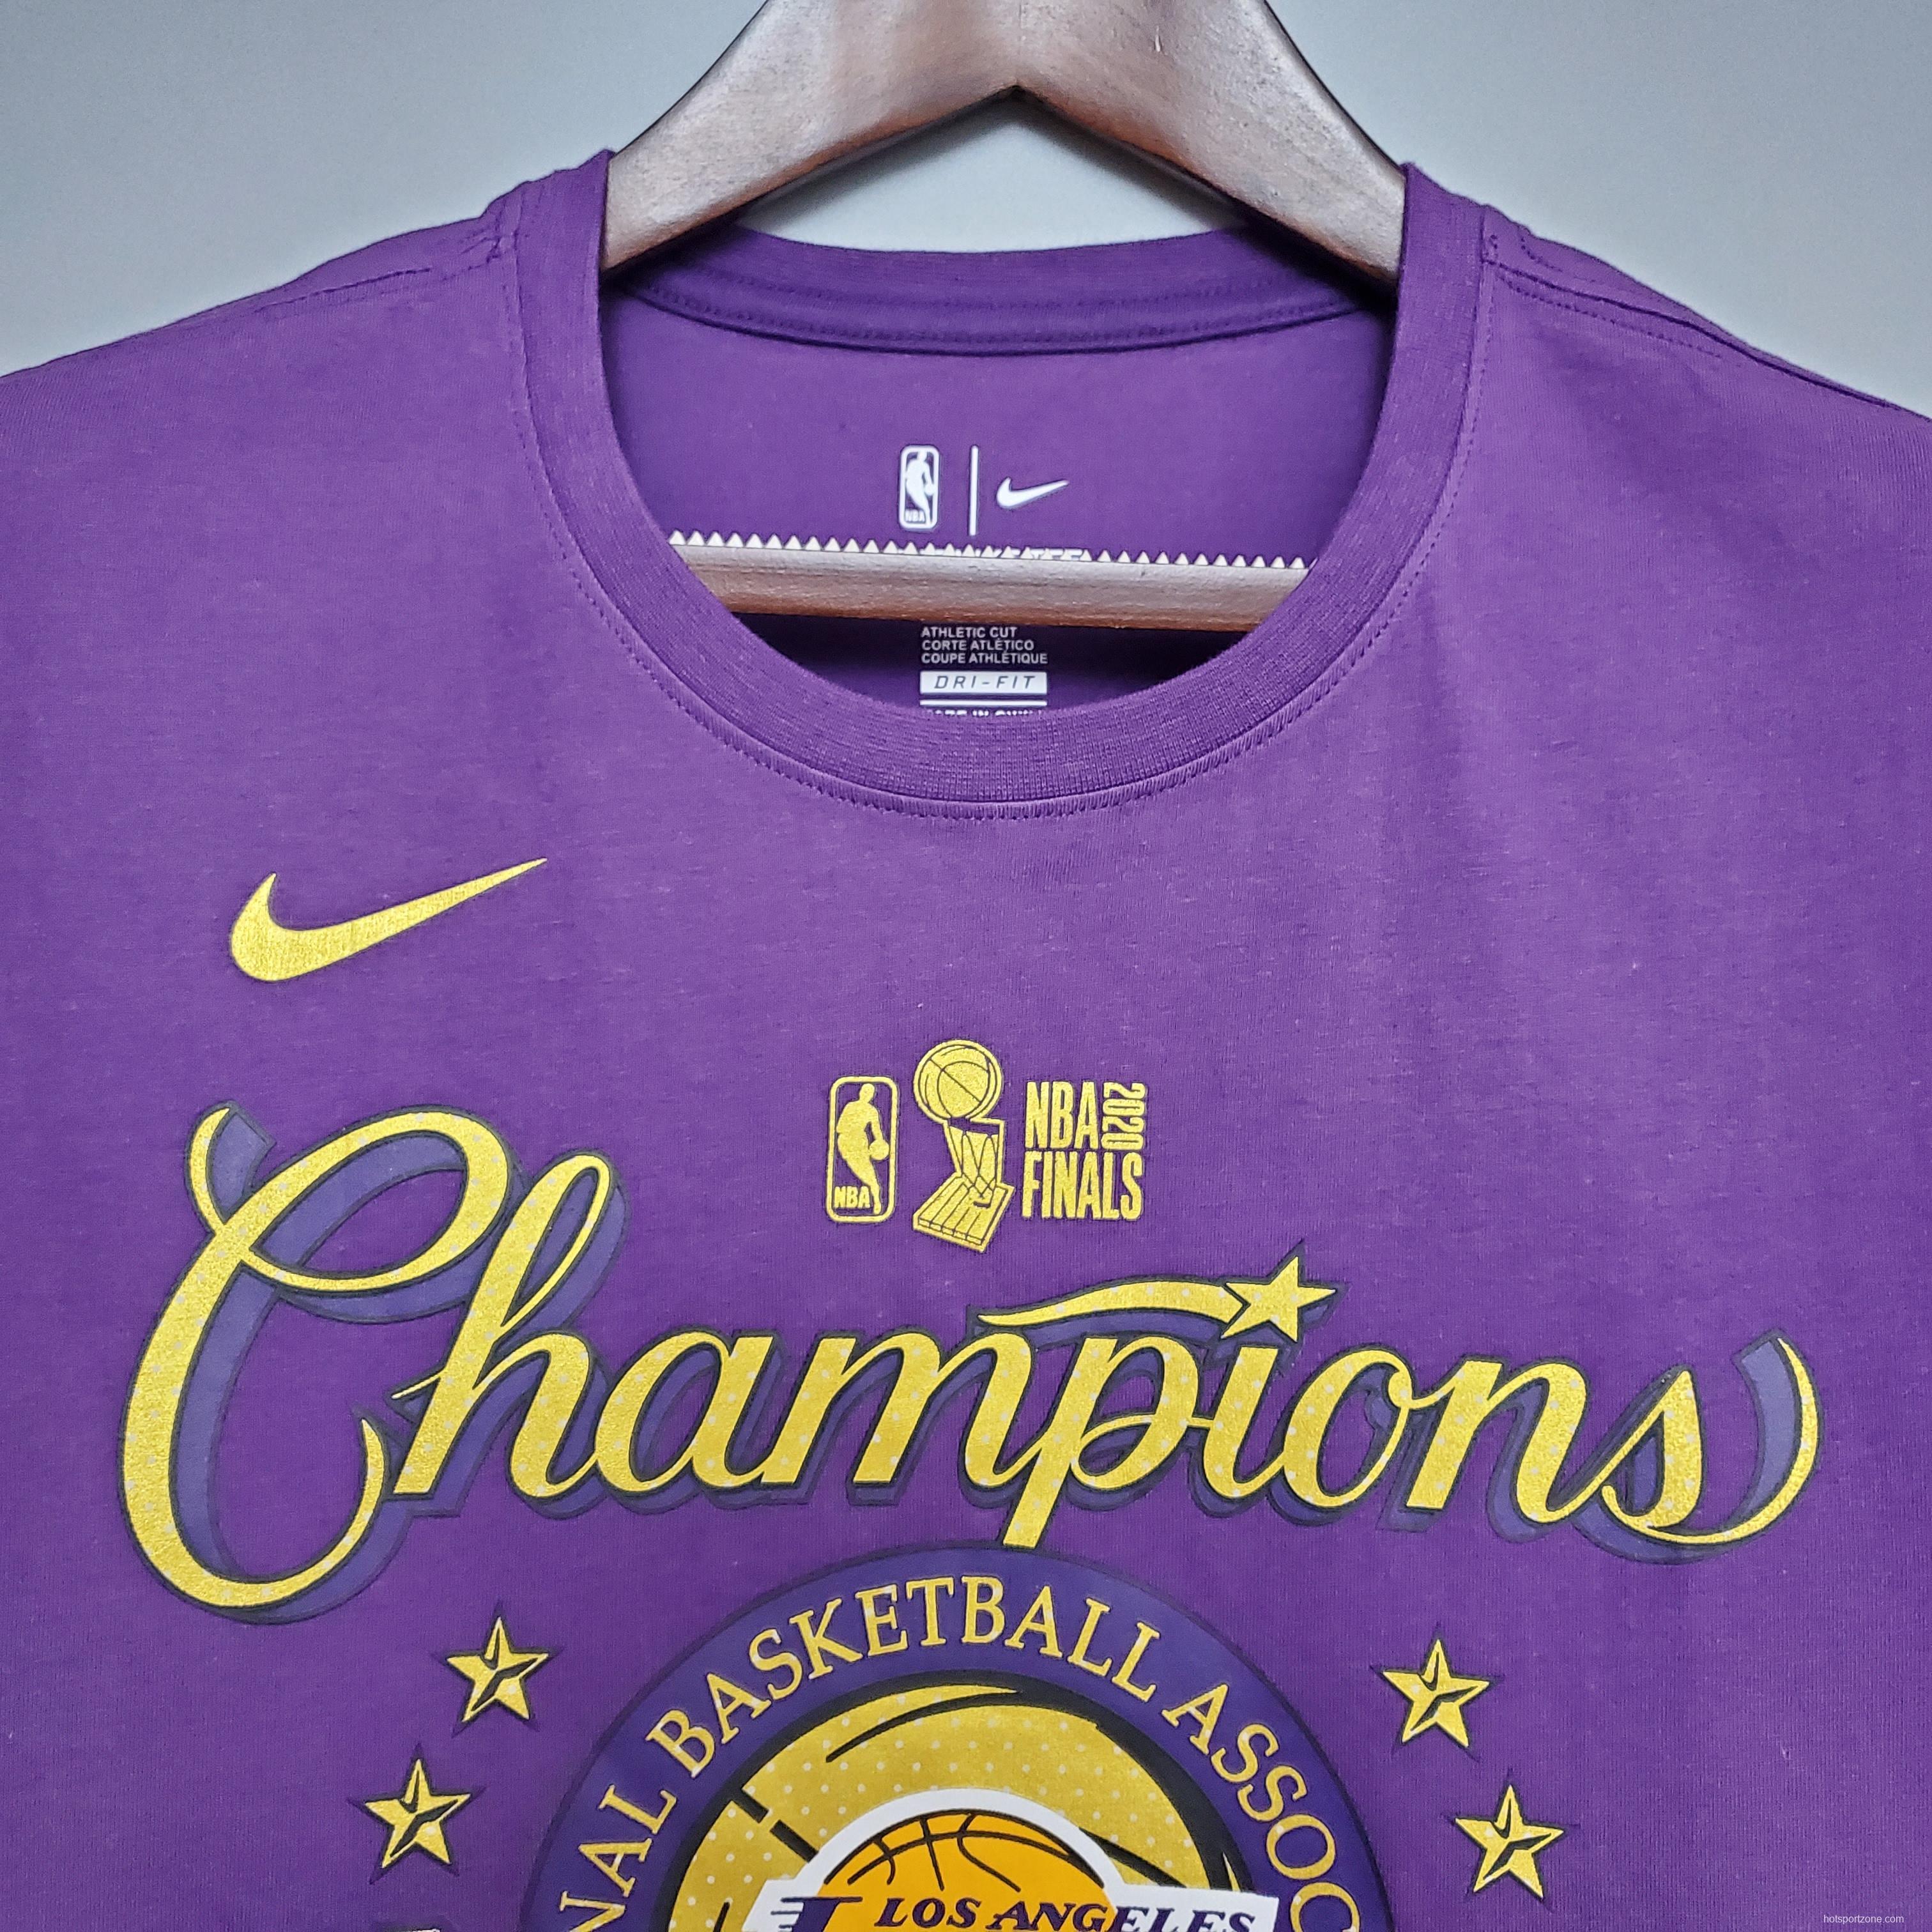 Lakers championship shirt purple